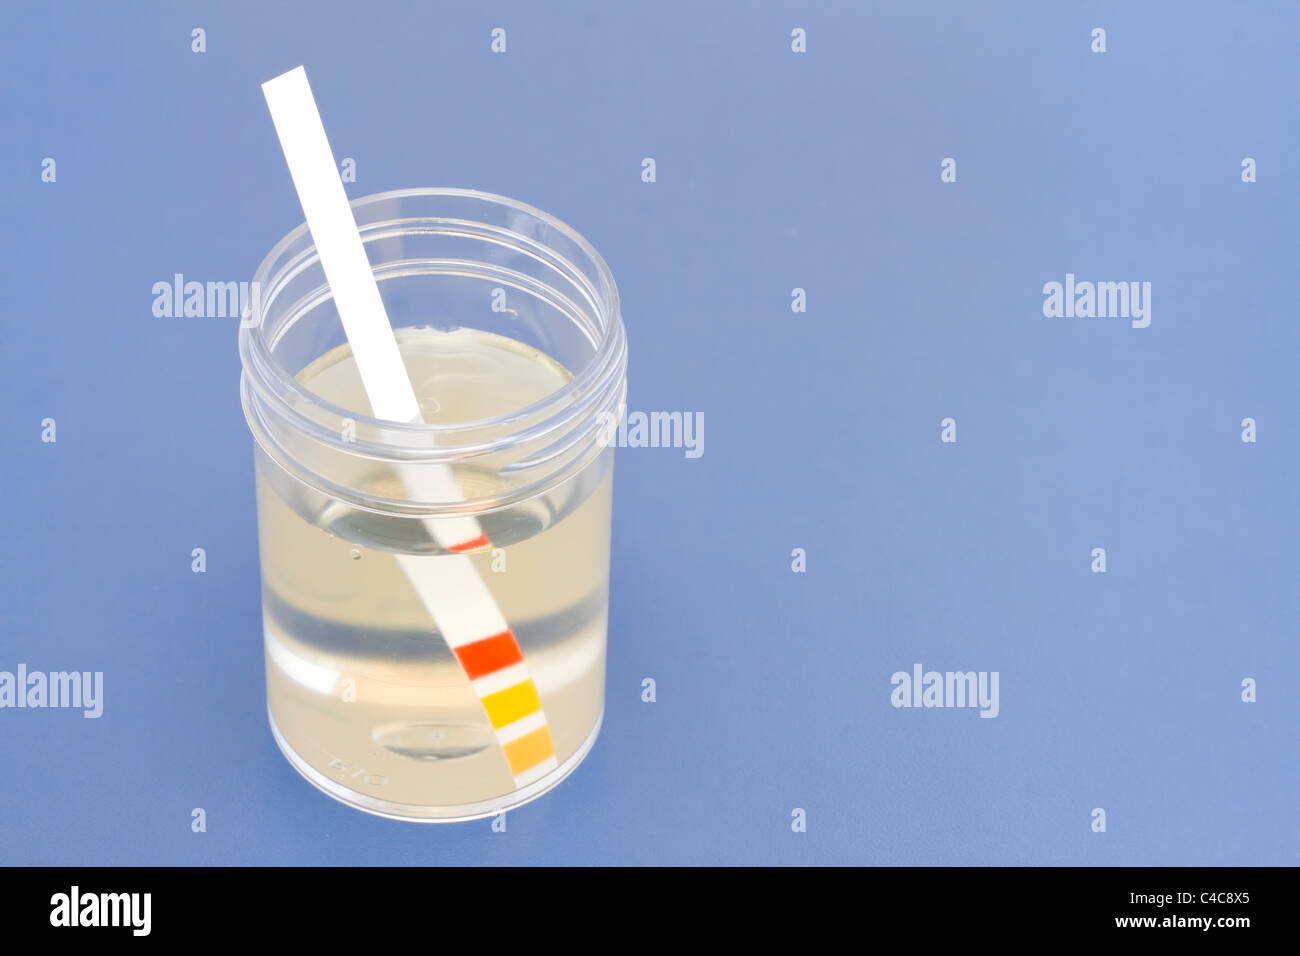 Test strip in plastic jar on blue background Stock Photo